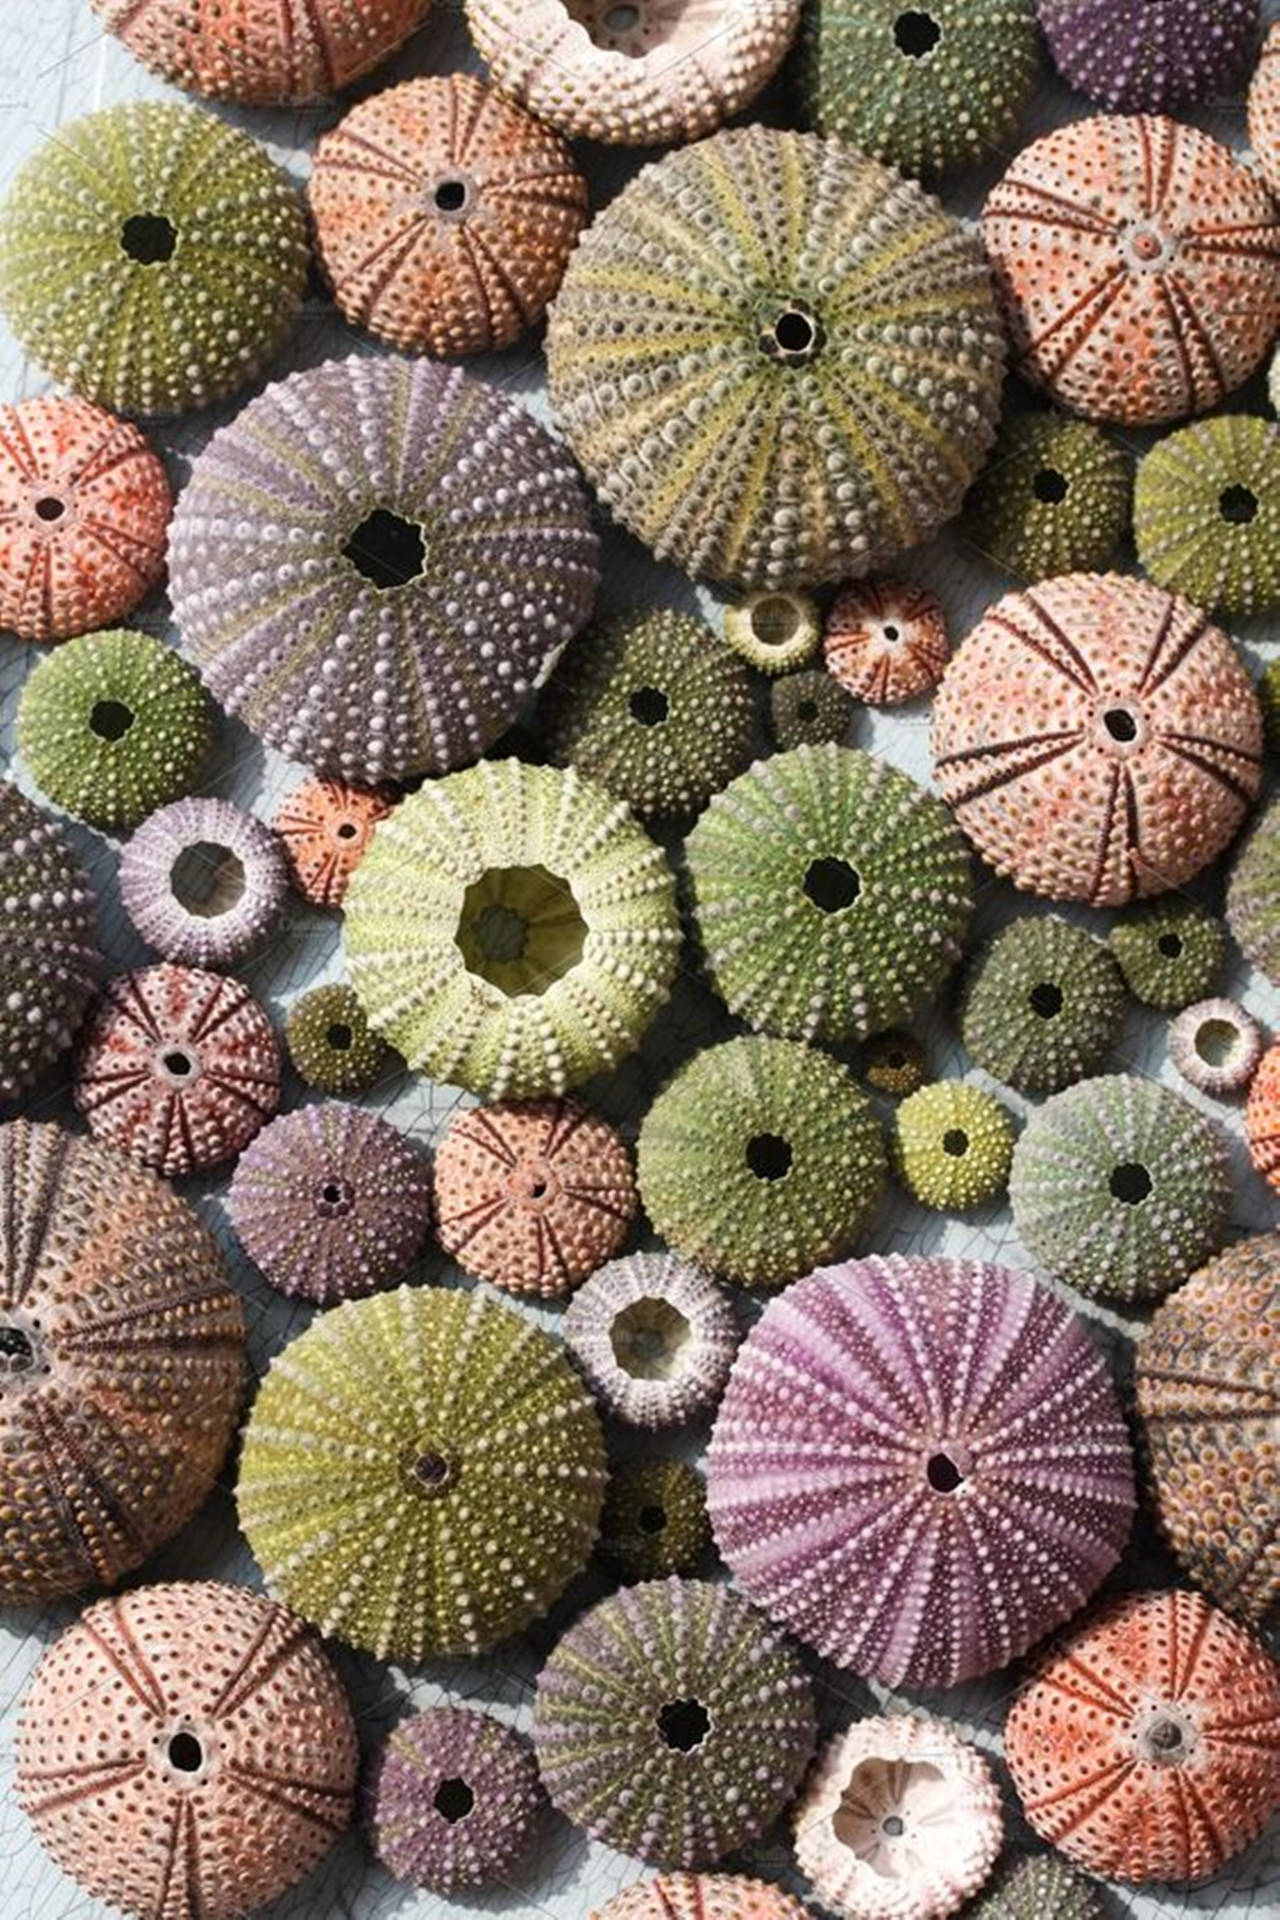 Colorful Sea Urchin Underwater Close-up Wallpaper